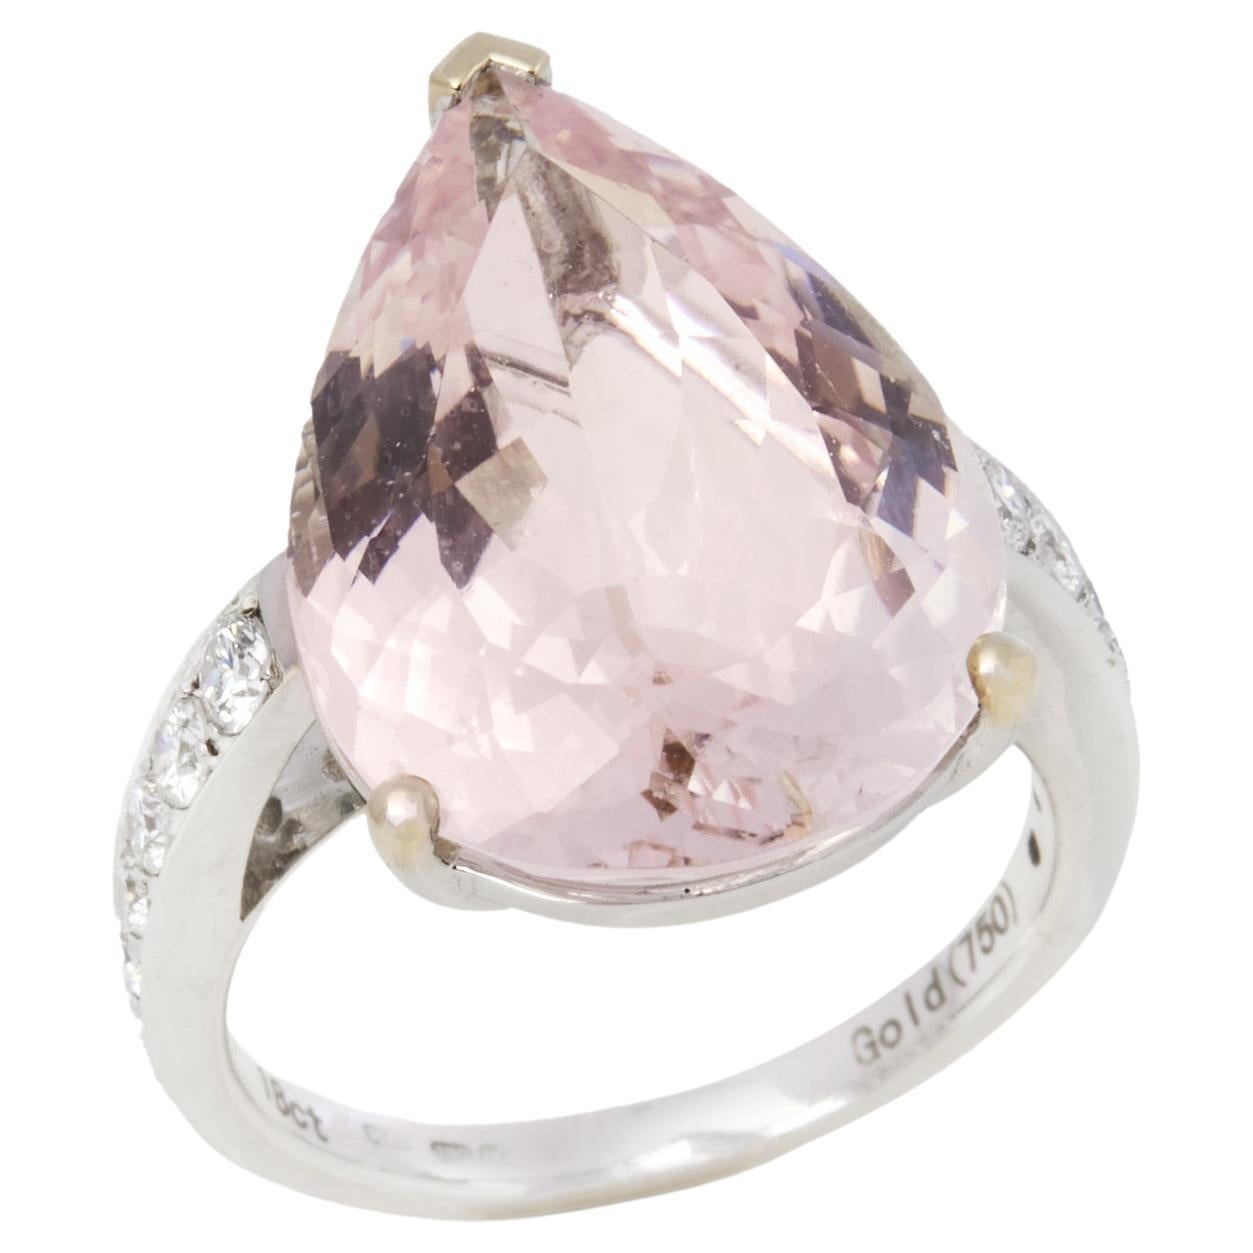 David Jerome Certified 12.24ct Pear Cut Morganite and Diamond Ring